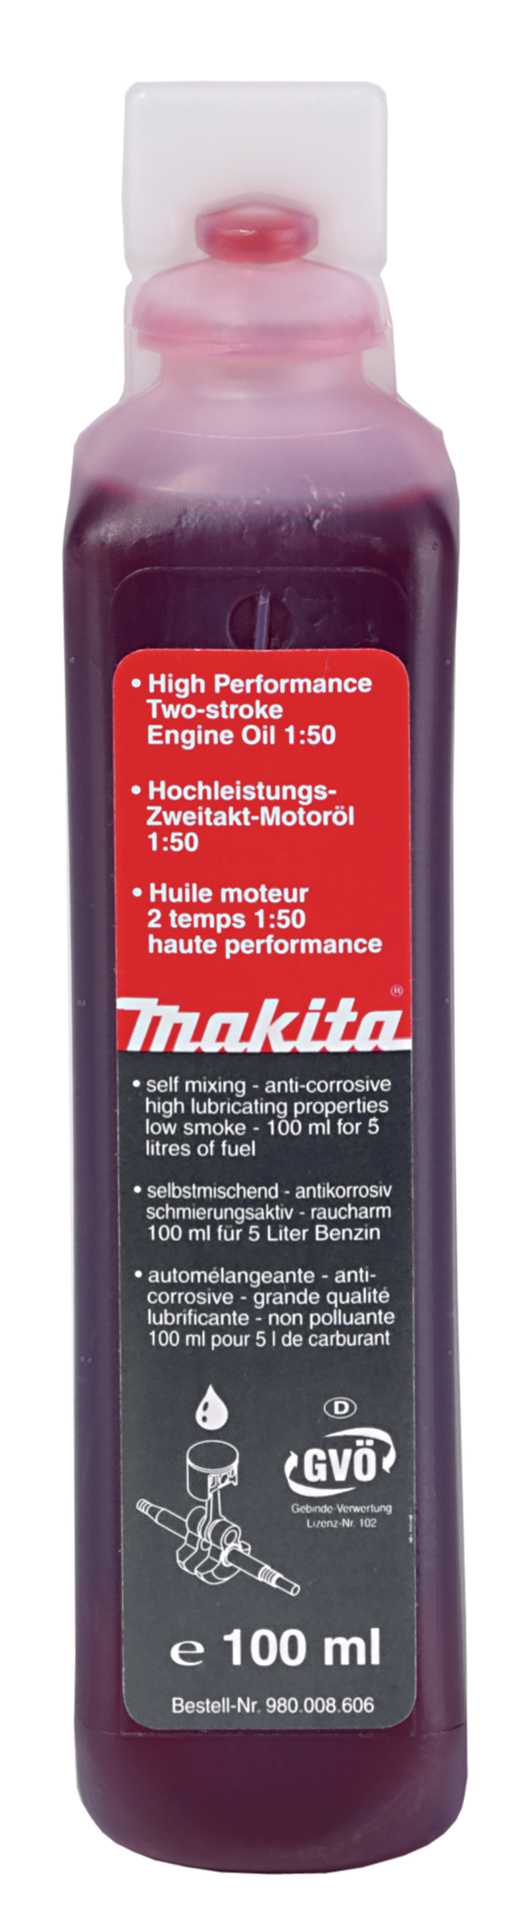 Makita Hochleistungs-2-Takt-Motorenöl